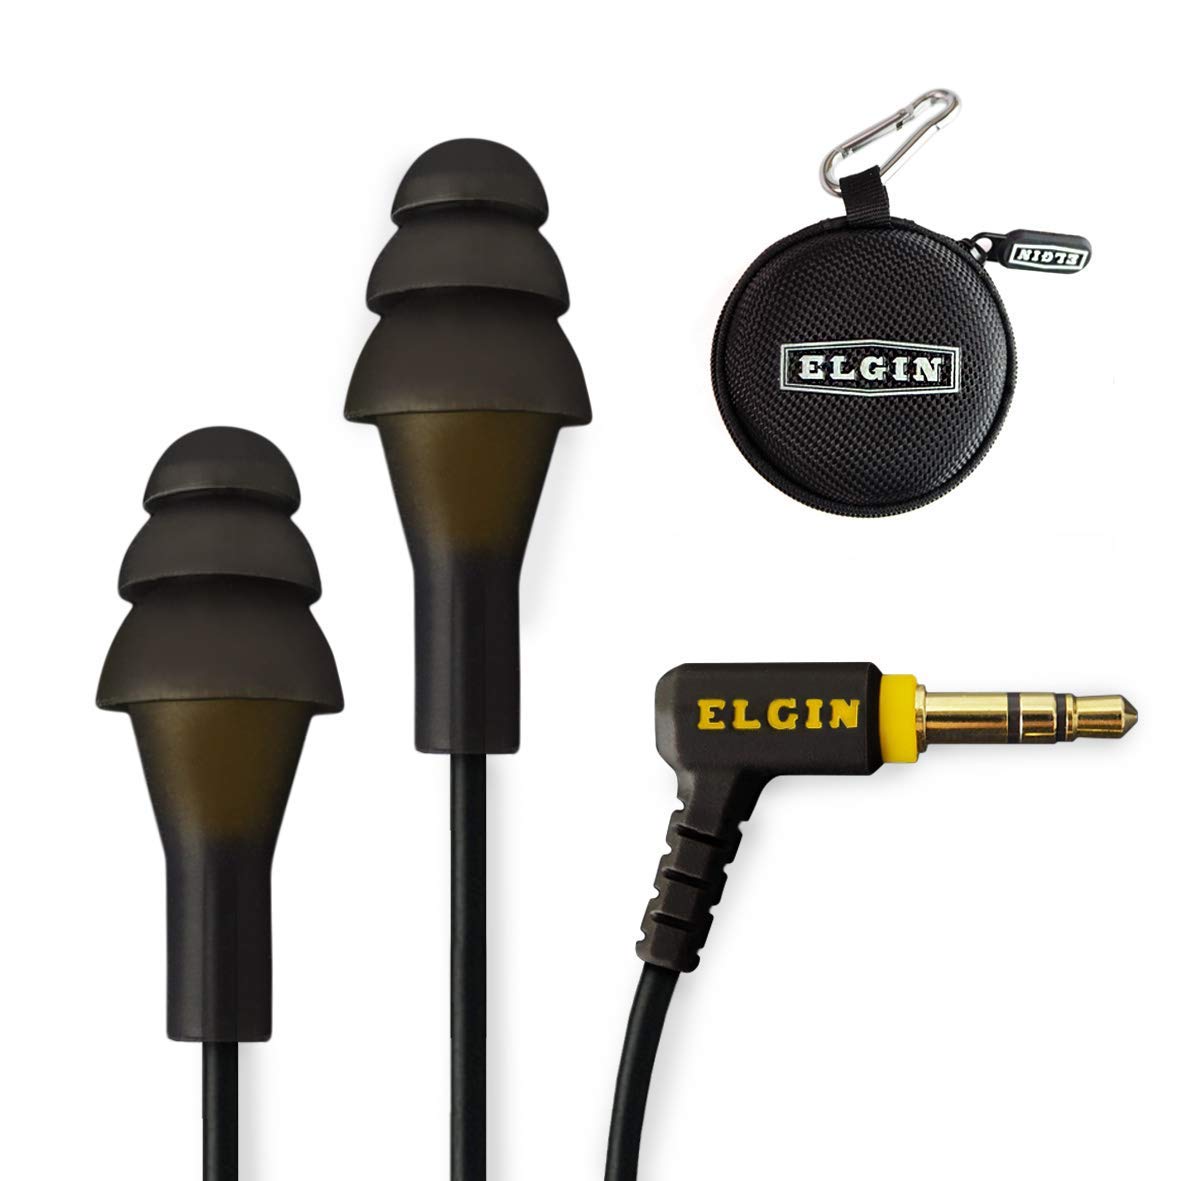 Elgin Ruckus 耳栓イヤフォン | OSHA 準拠のノイズリダクション インイヤー ヘッドフォン : 絶縁耳栓イヤホン